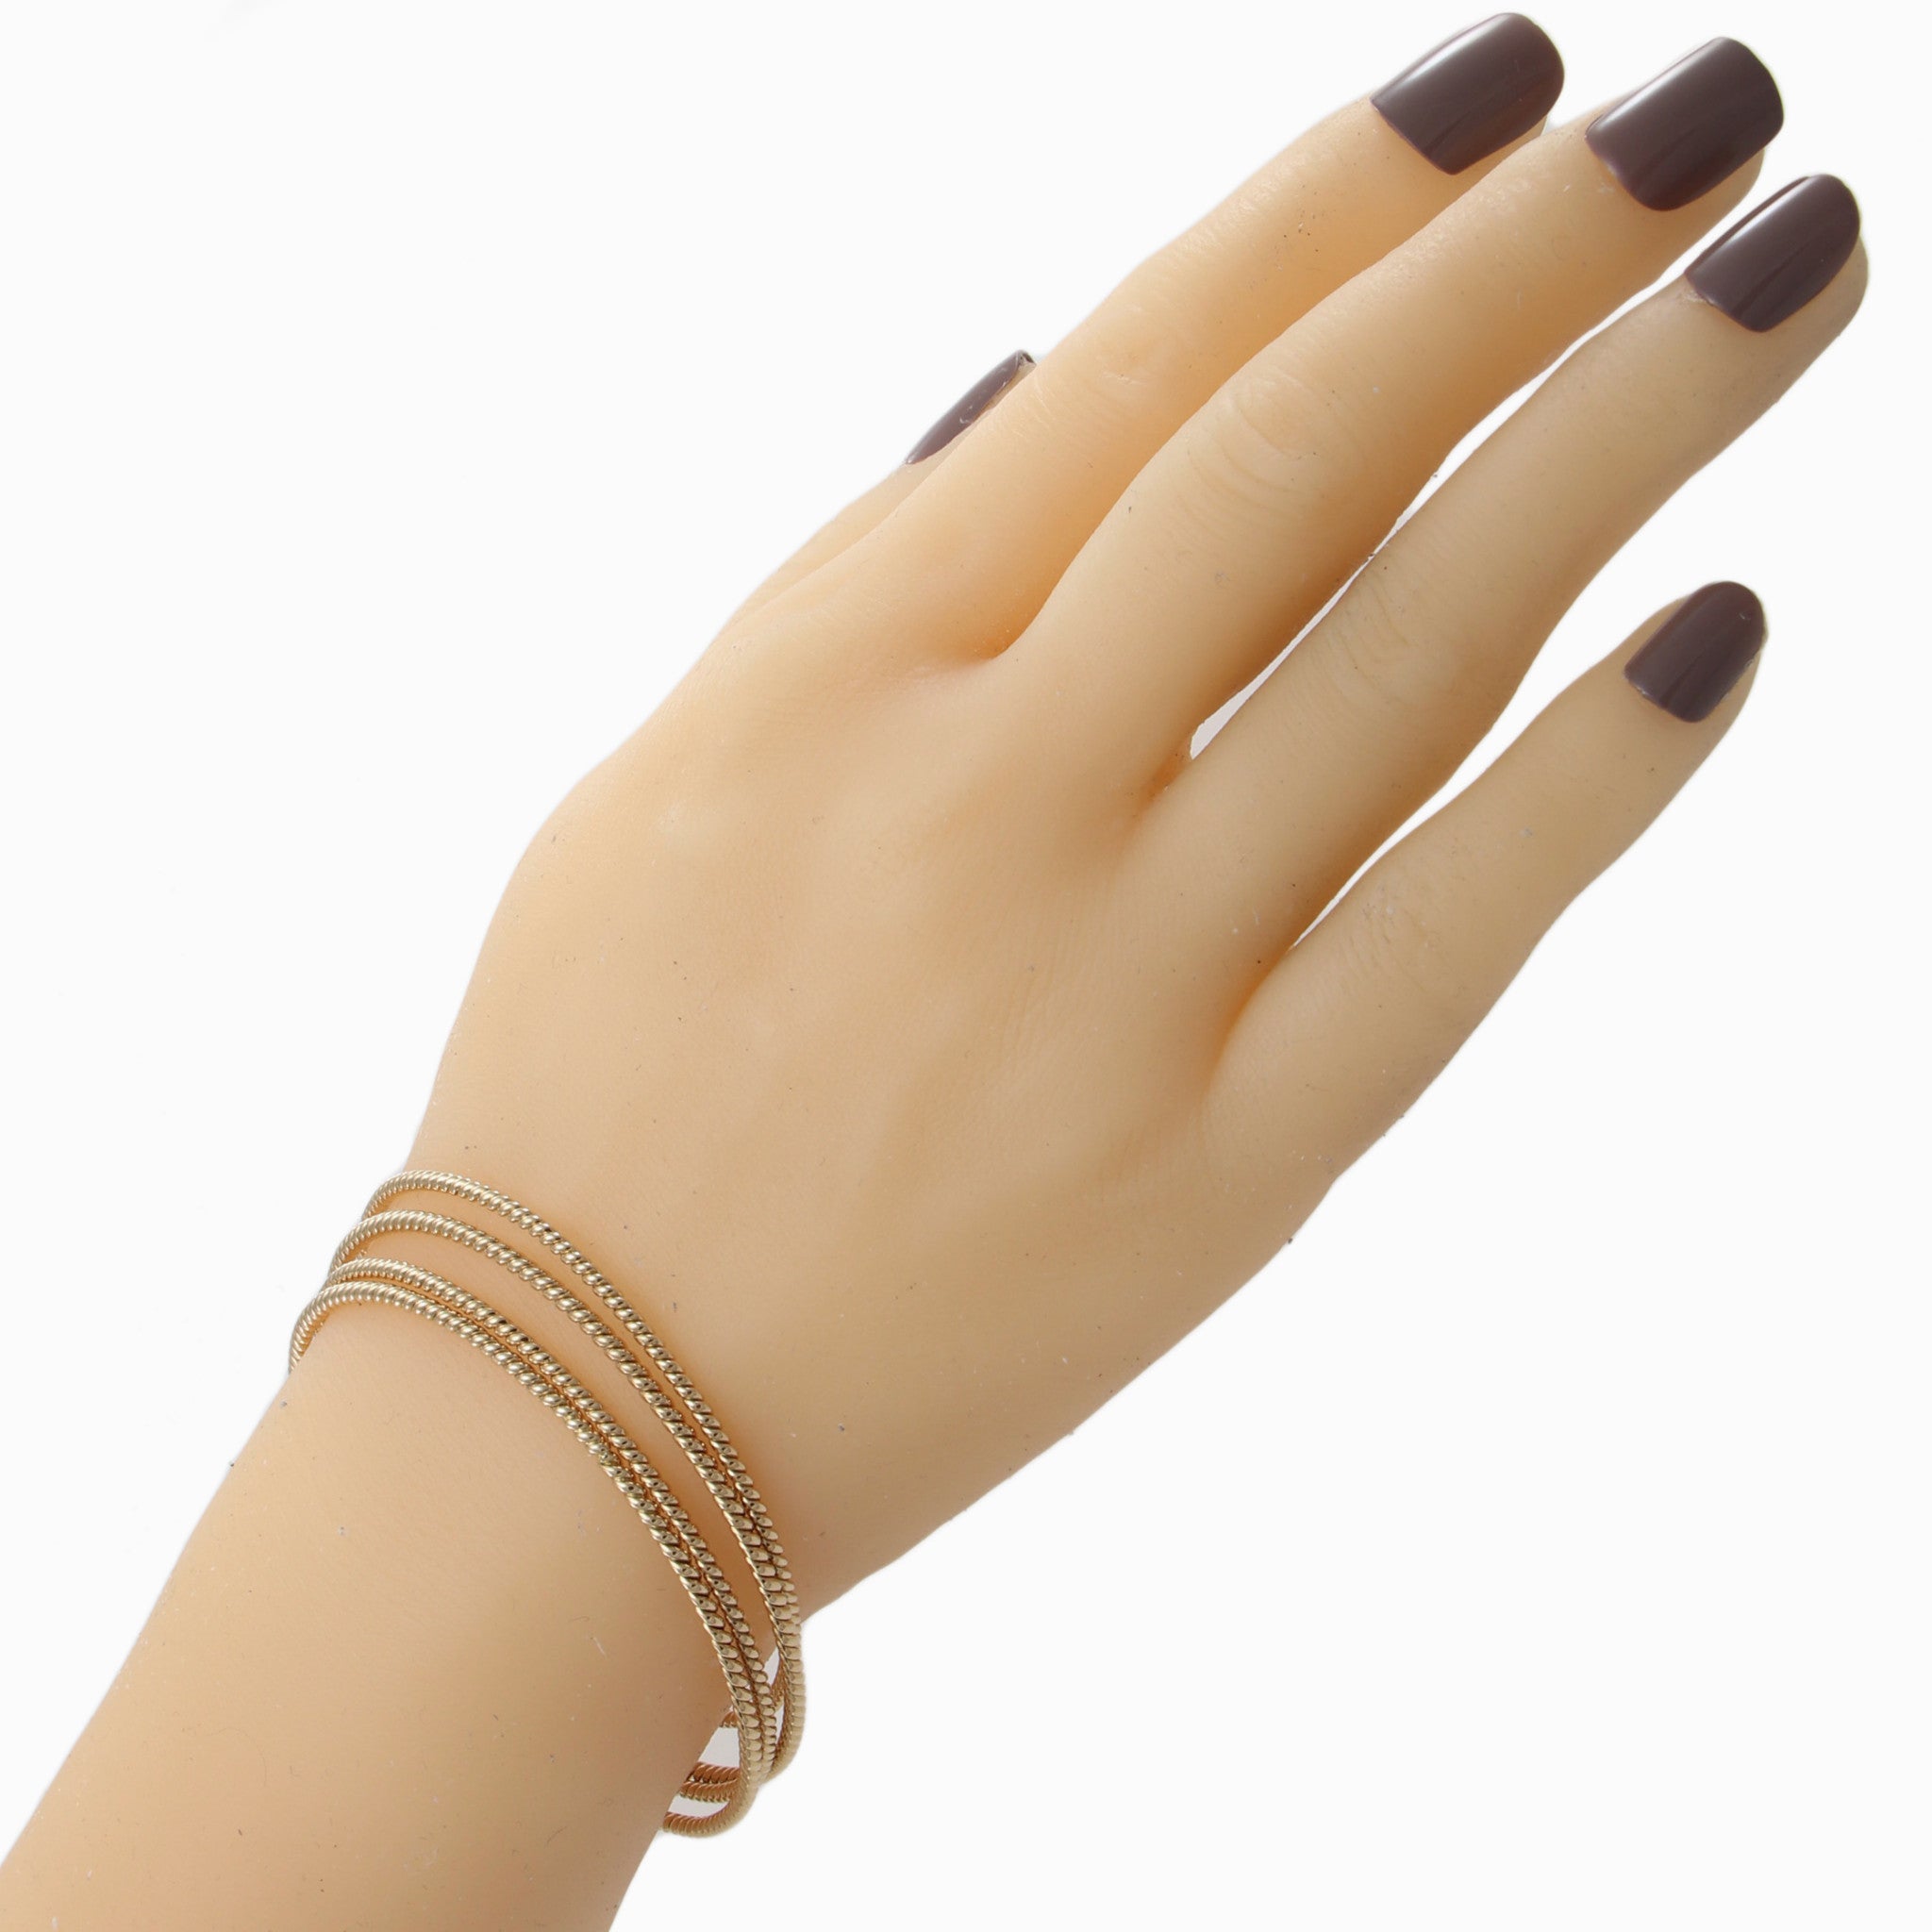 Buy Latest Gold Bracelet Designs 2 Gram Gold Plated Jewellery